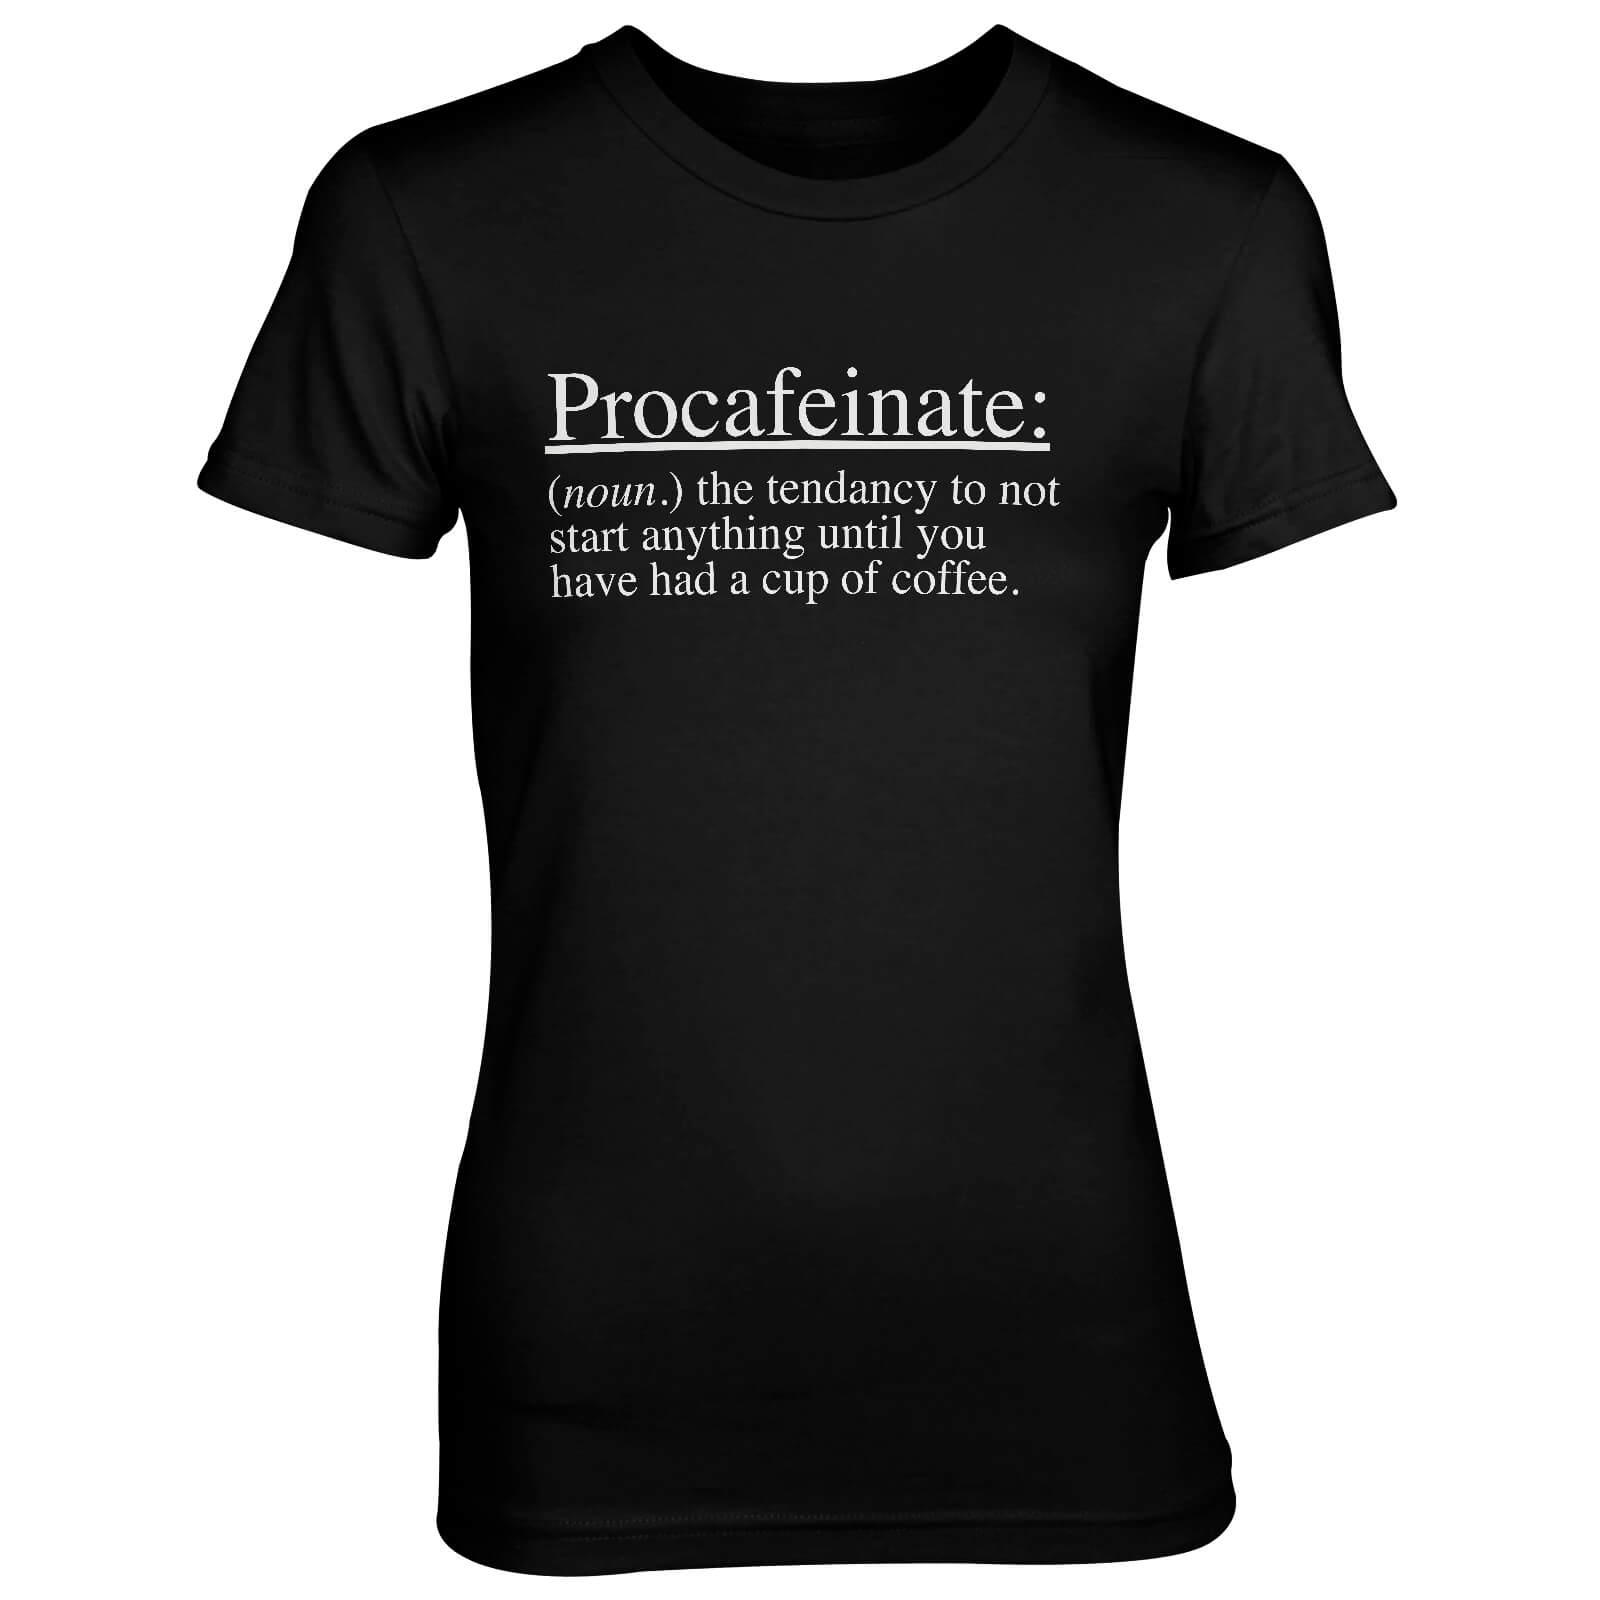 Procafeinate: The Tendancy To Not Start Anything Women's Black T-Shirt - S - Black